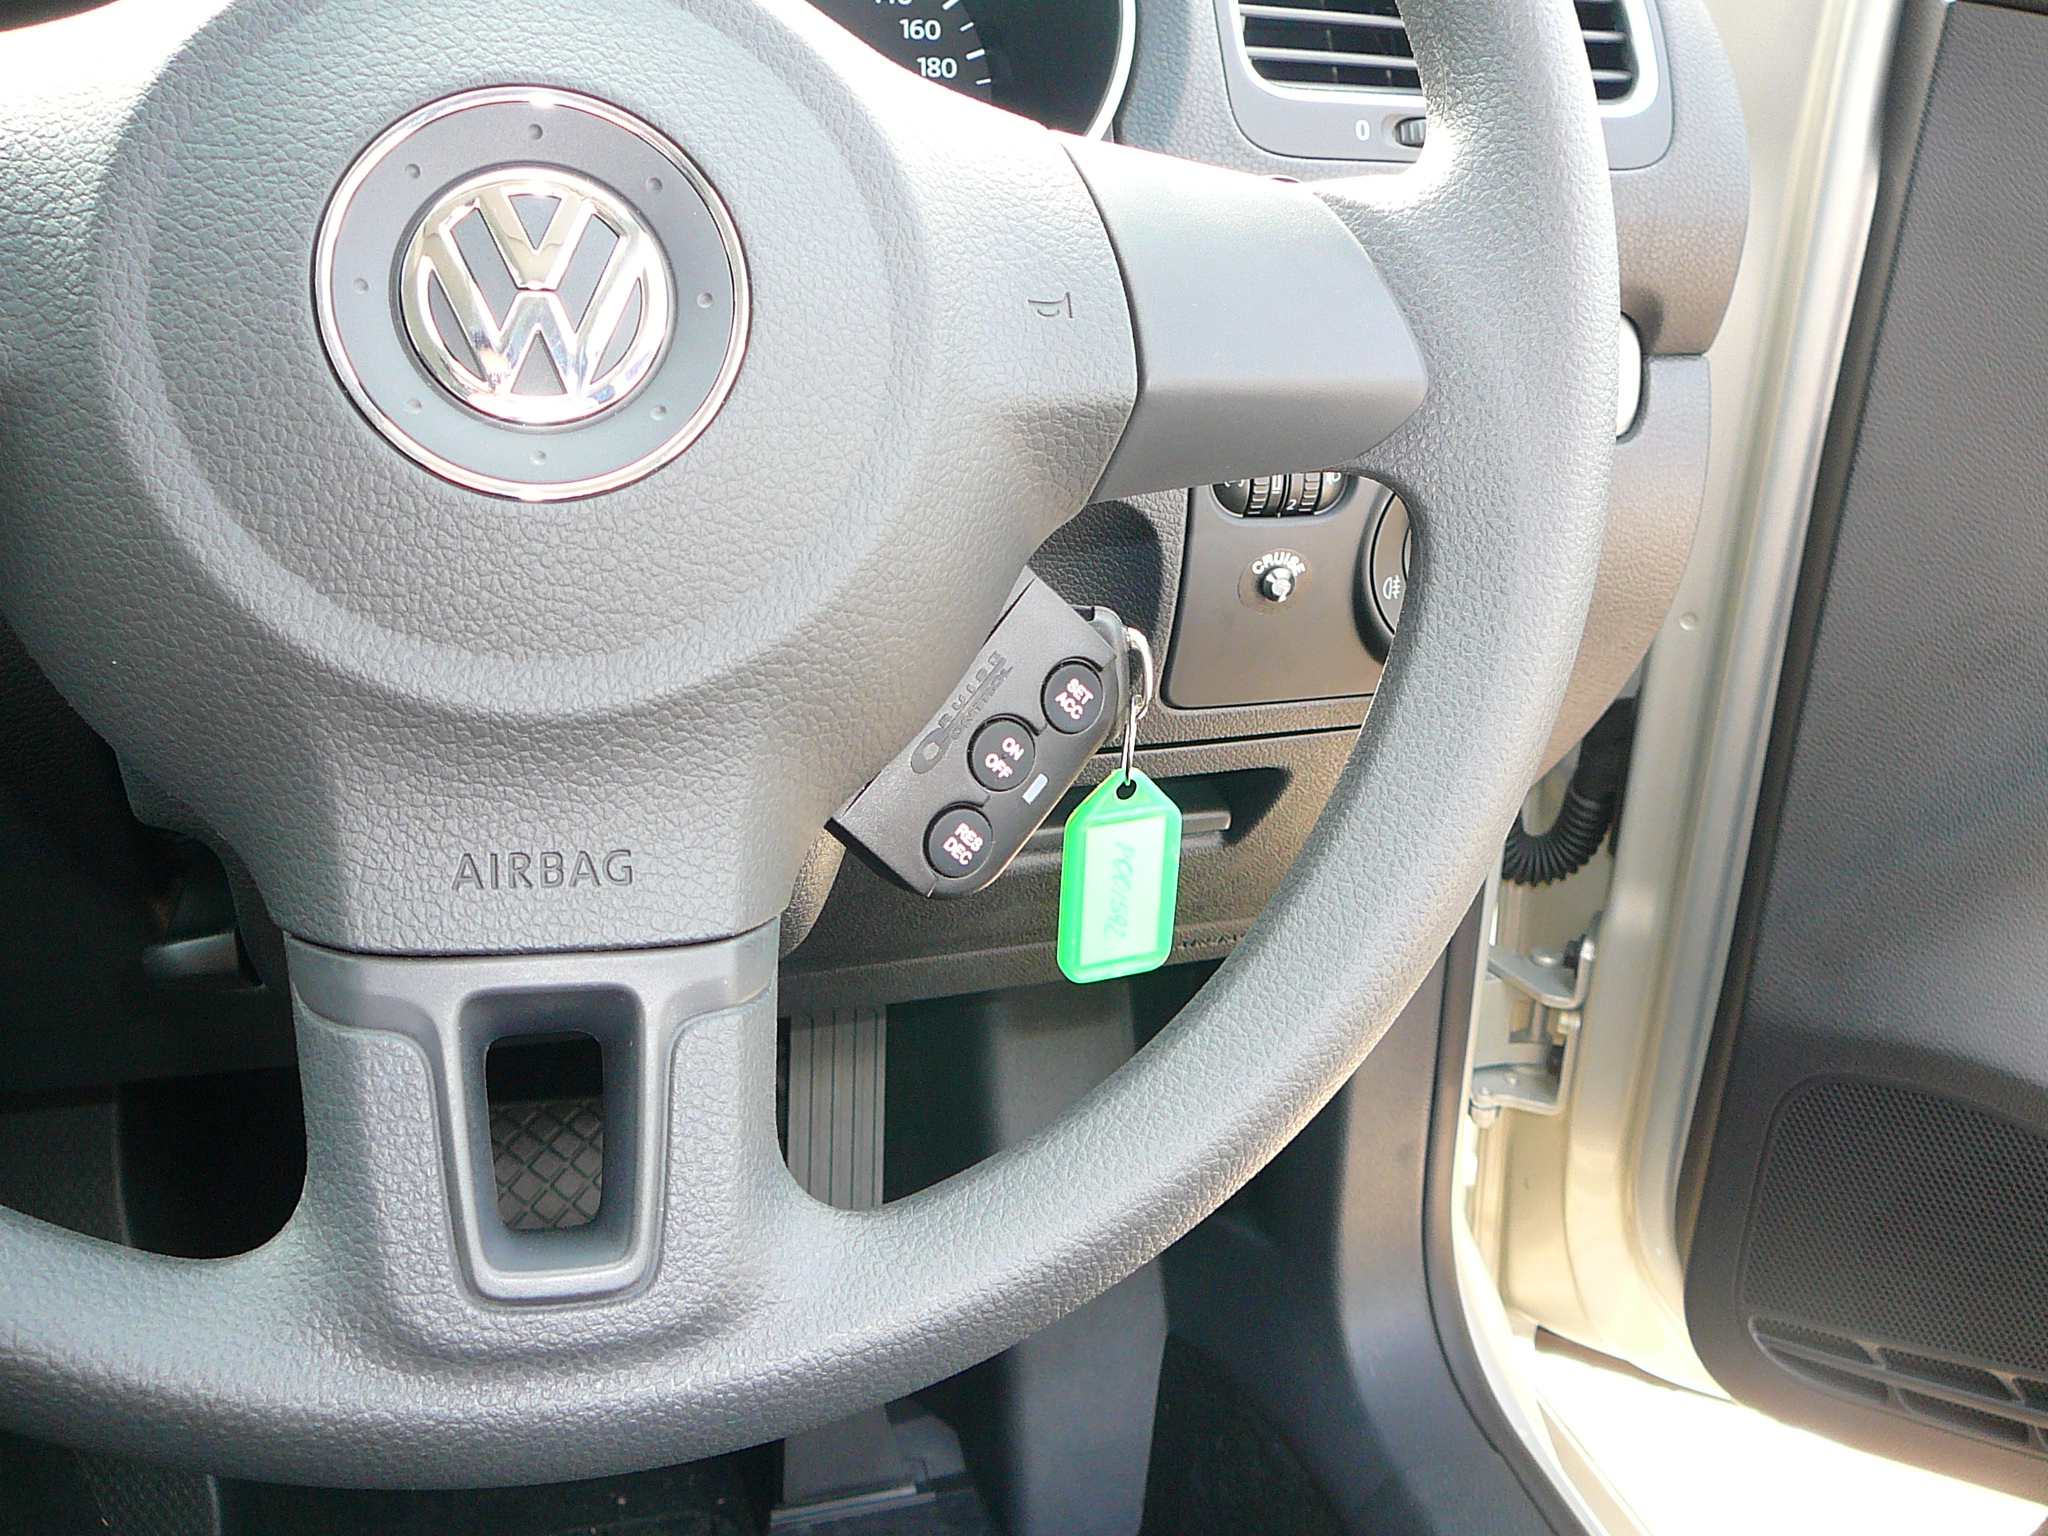 VW Golf 2012 Cruise control steering wheel mount